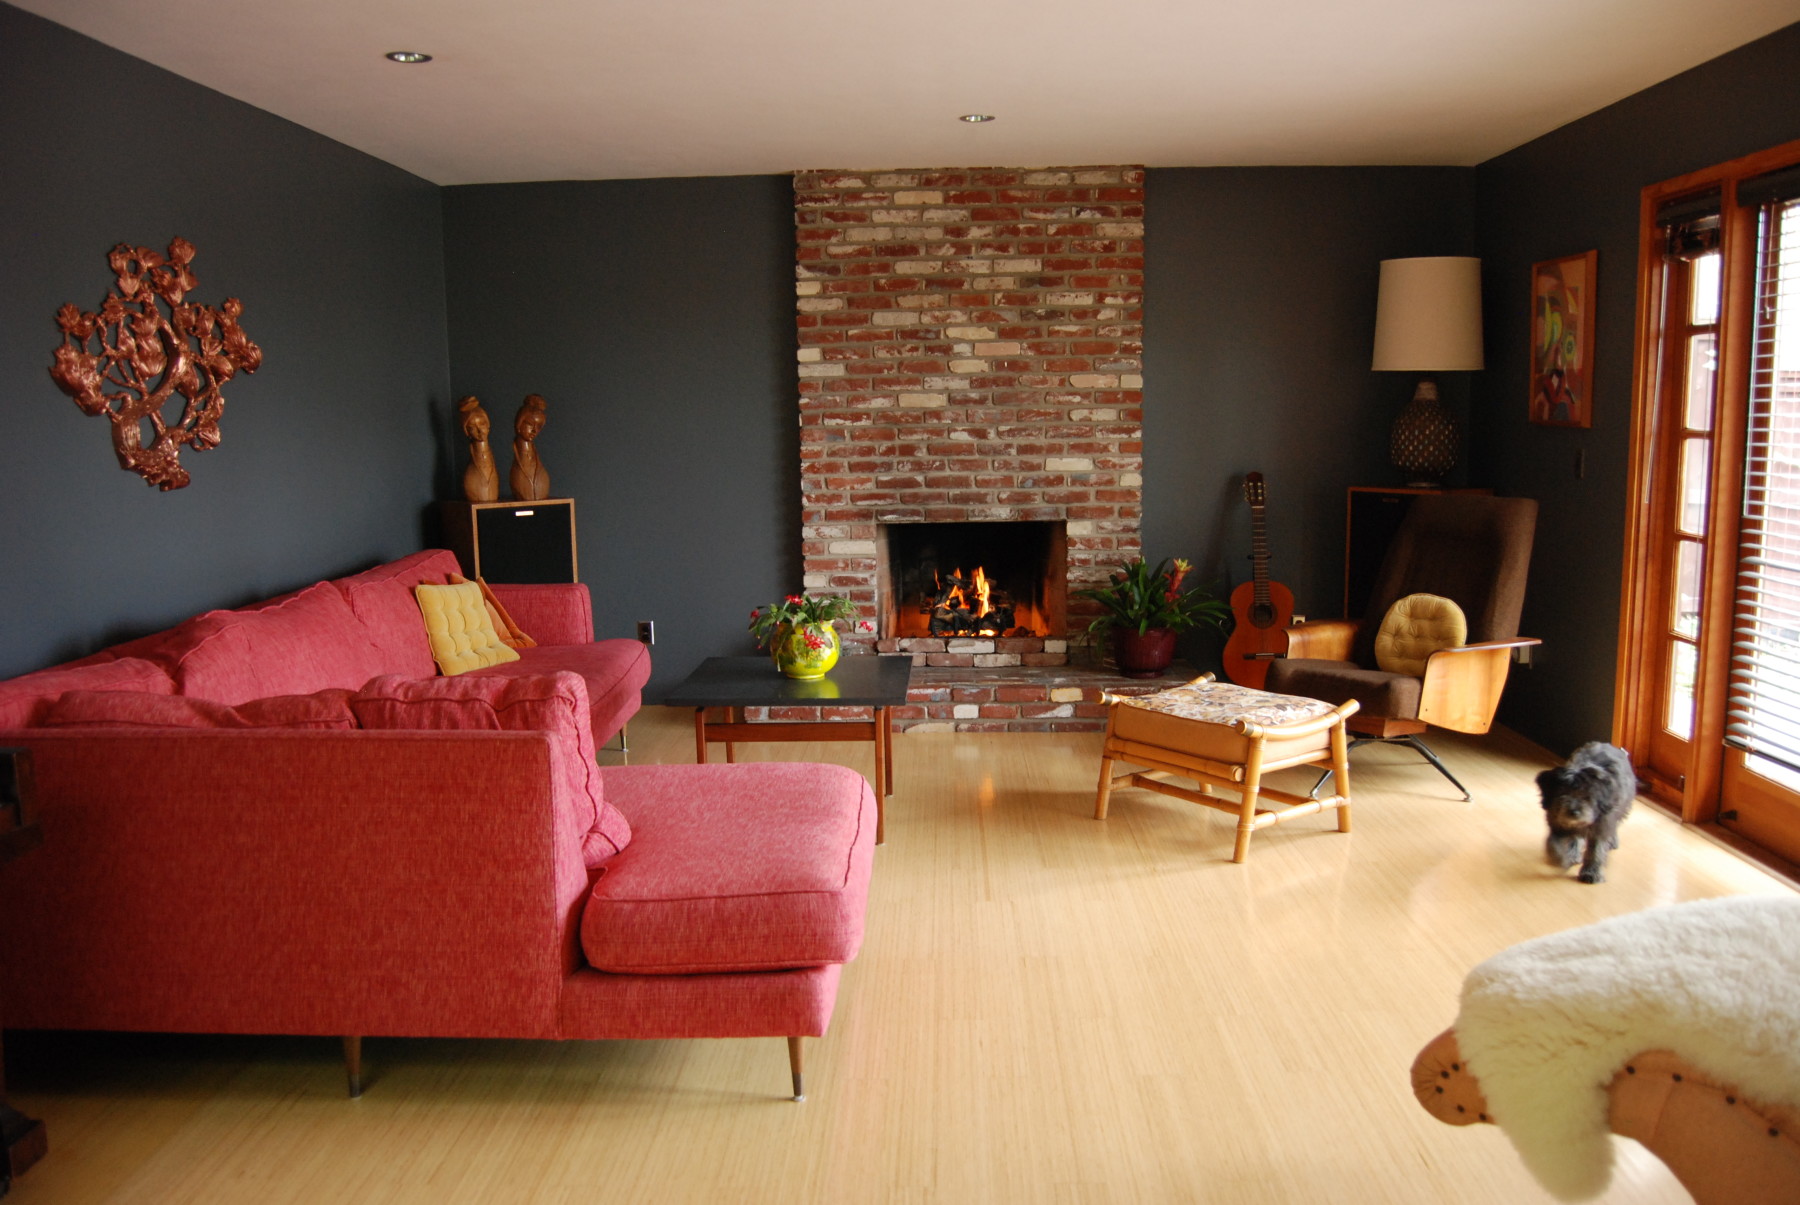 2018 Mid Century Living Room Decor Designs And Ideas Decor Or